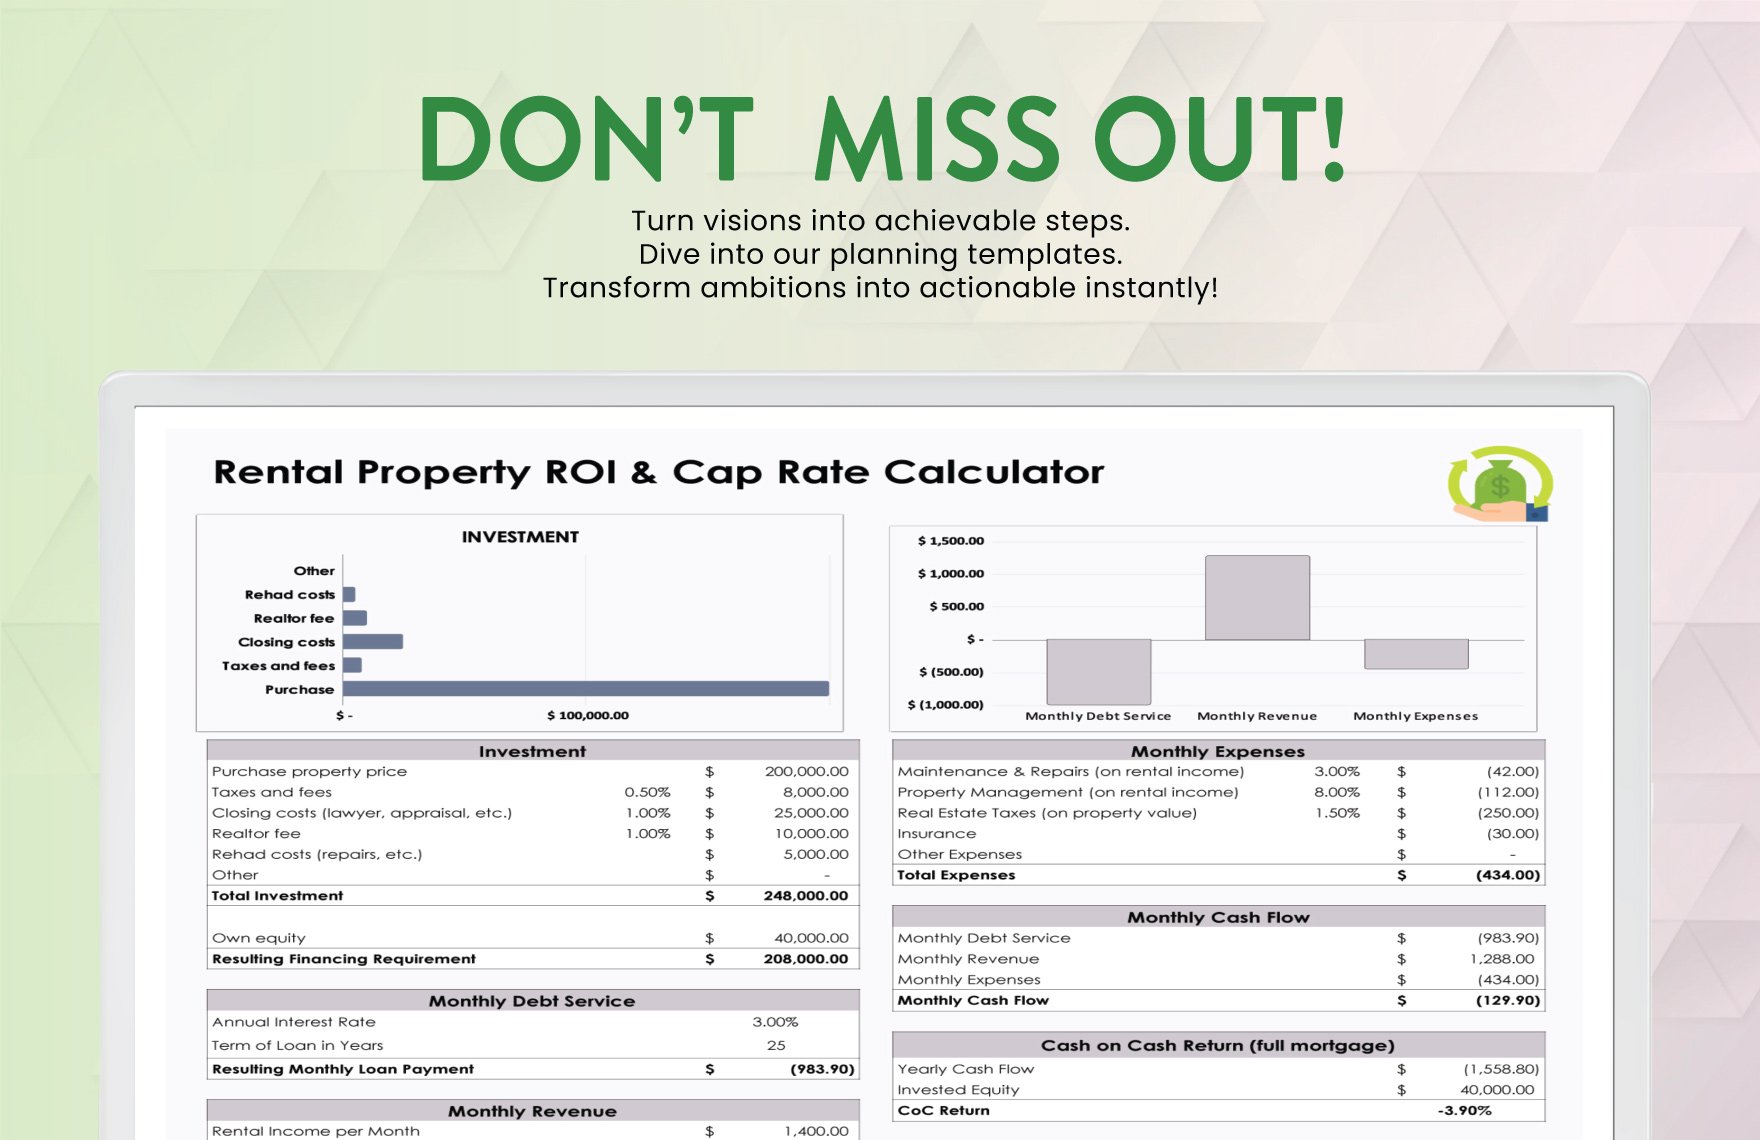 Rental Property ROI & Cap Rate Calculator